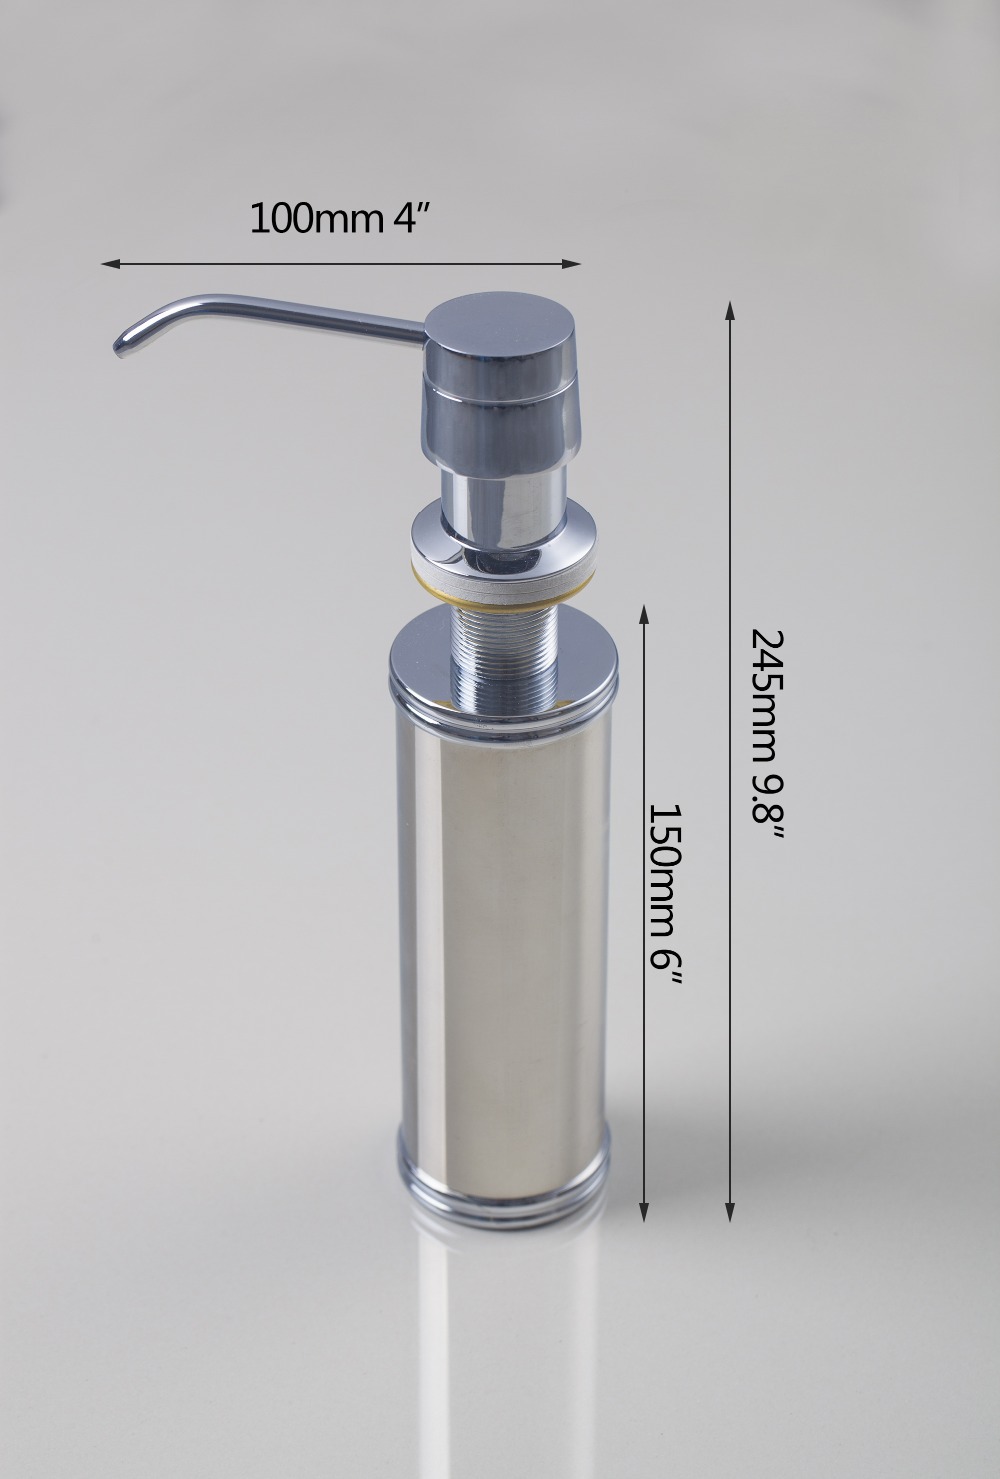 5665 whole and retail promotion kitchen deck mounted chrome liquid soap dispenser soap dispenser